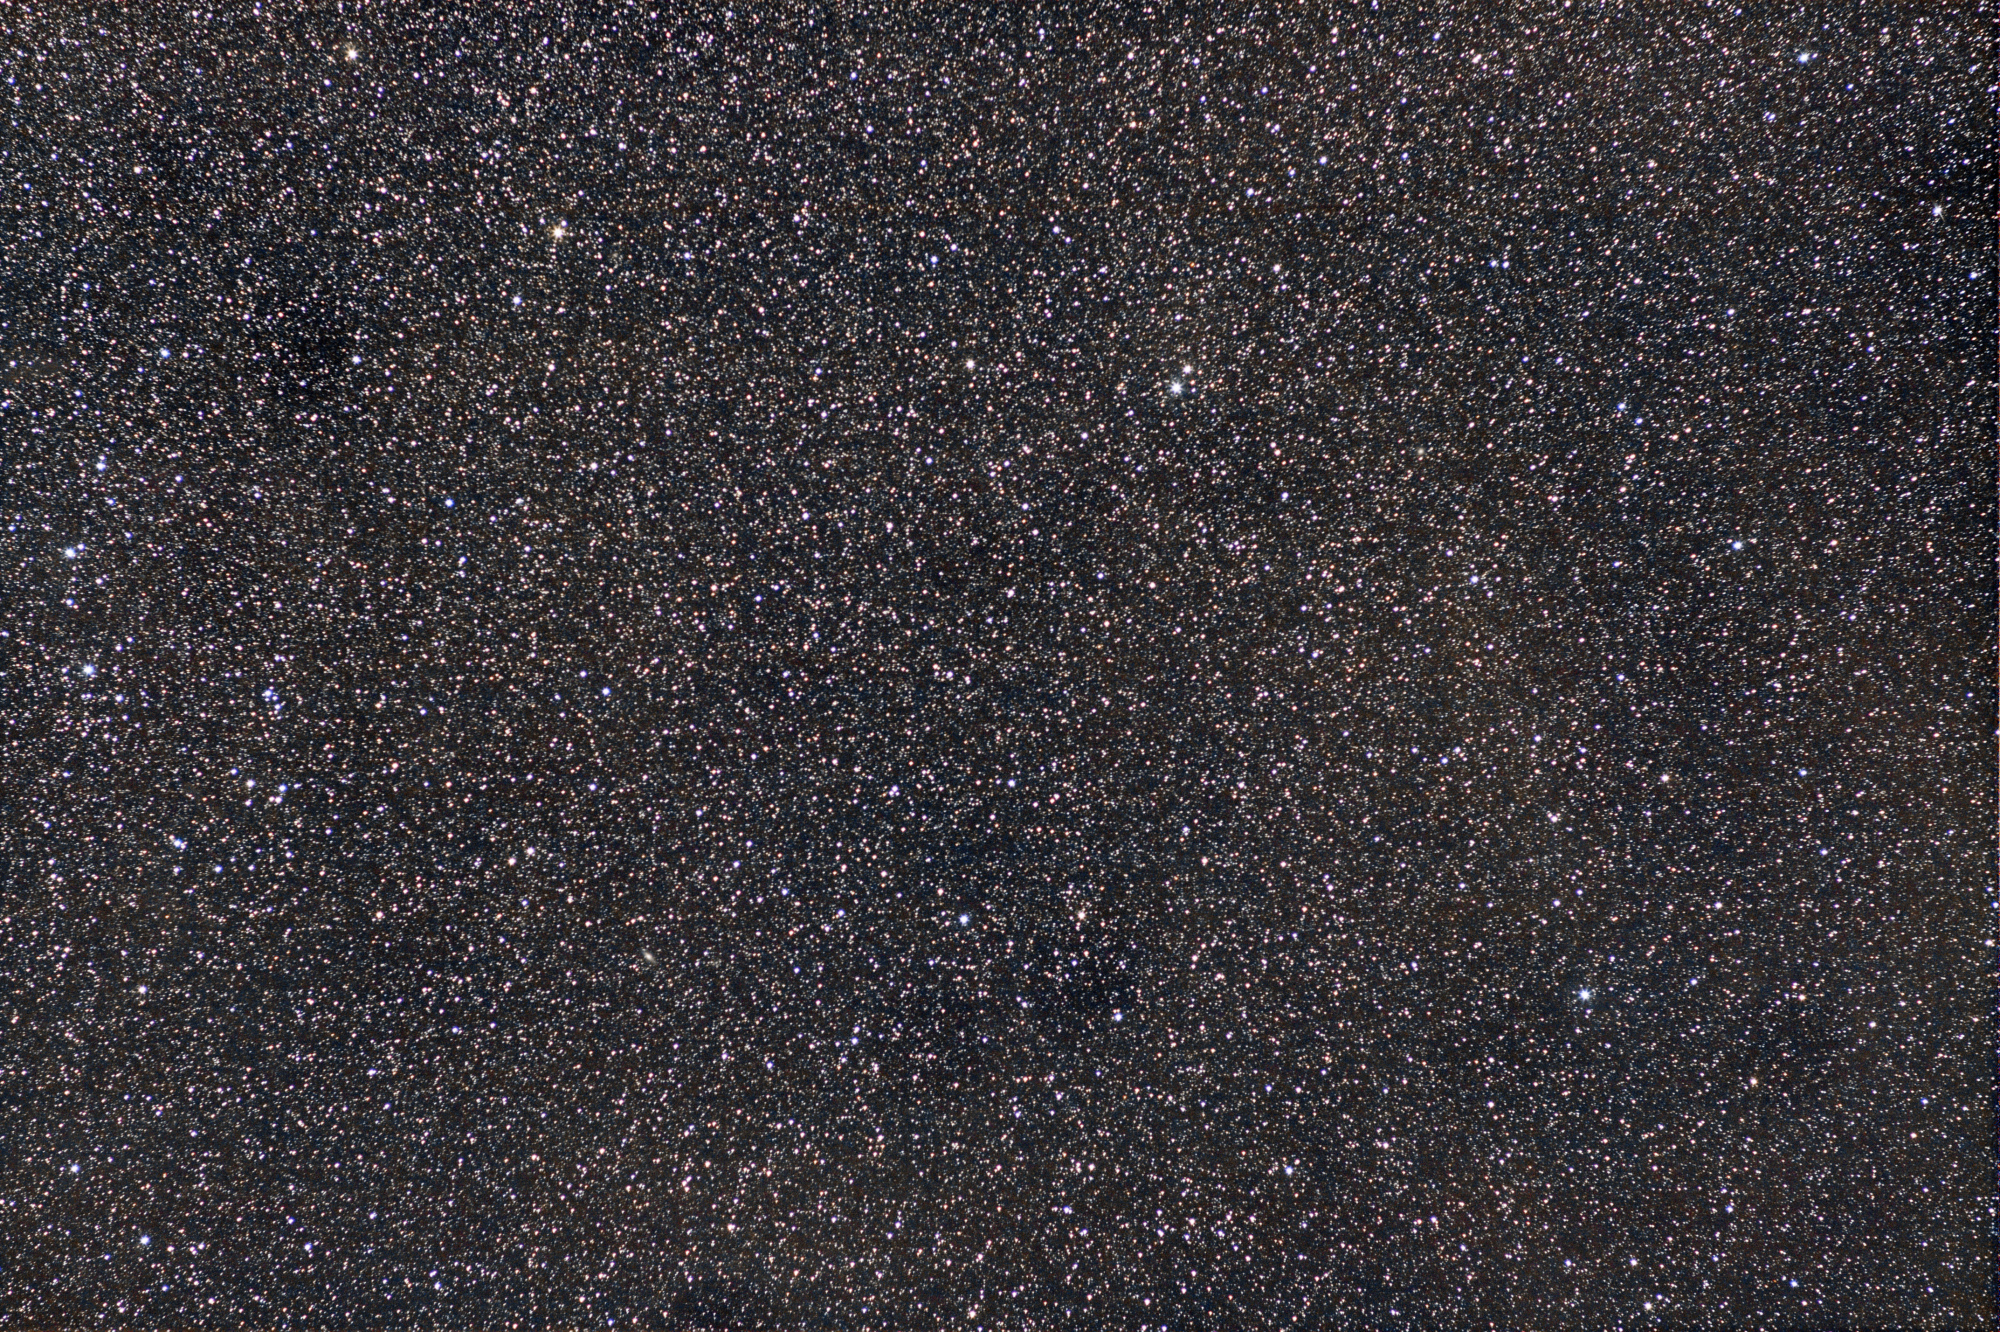 02_NGC7331_GRAND-CHAMP_SIRIL_CS2.thumb.jpg.62b223da96d2d1a0206f27a31ad6252f.jpg